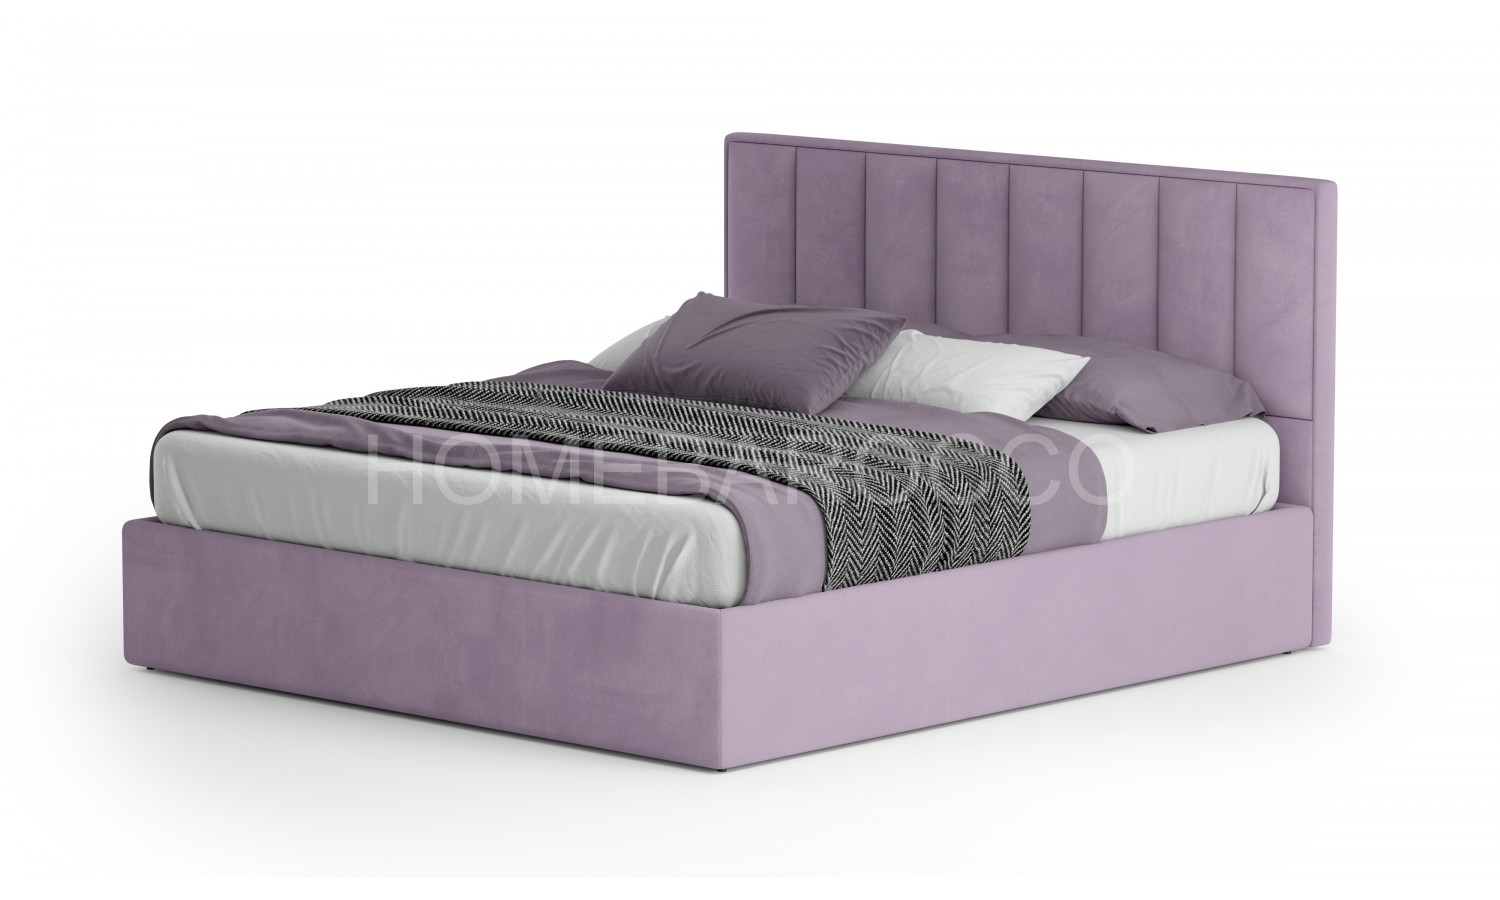 Кровать Клер Velutto 011 2.0 м